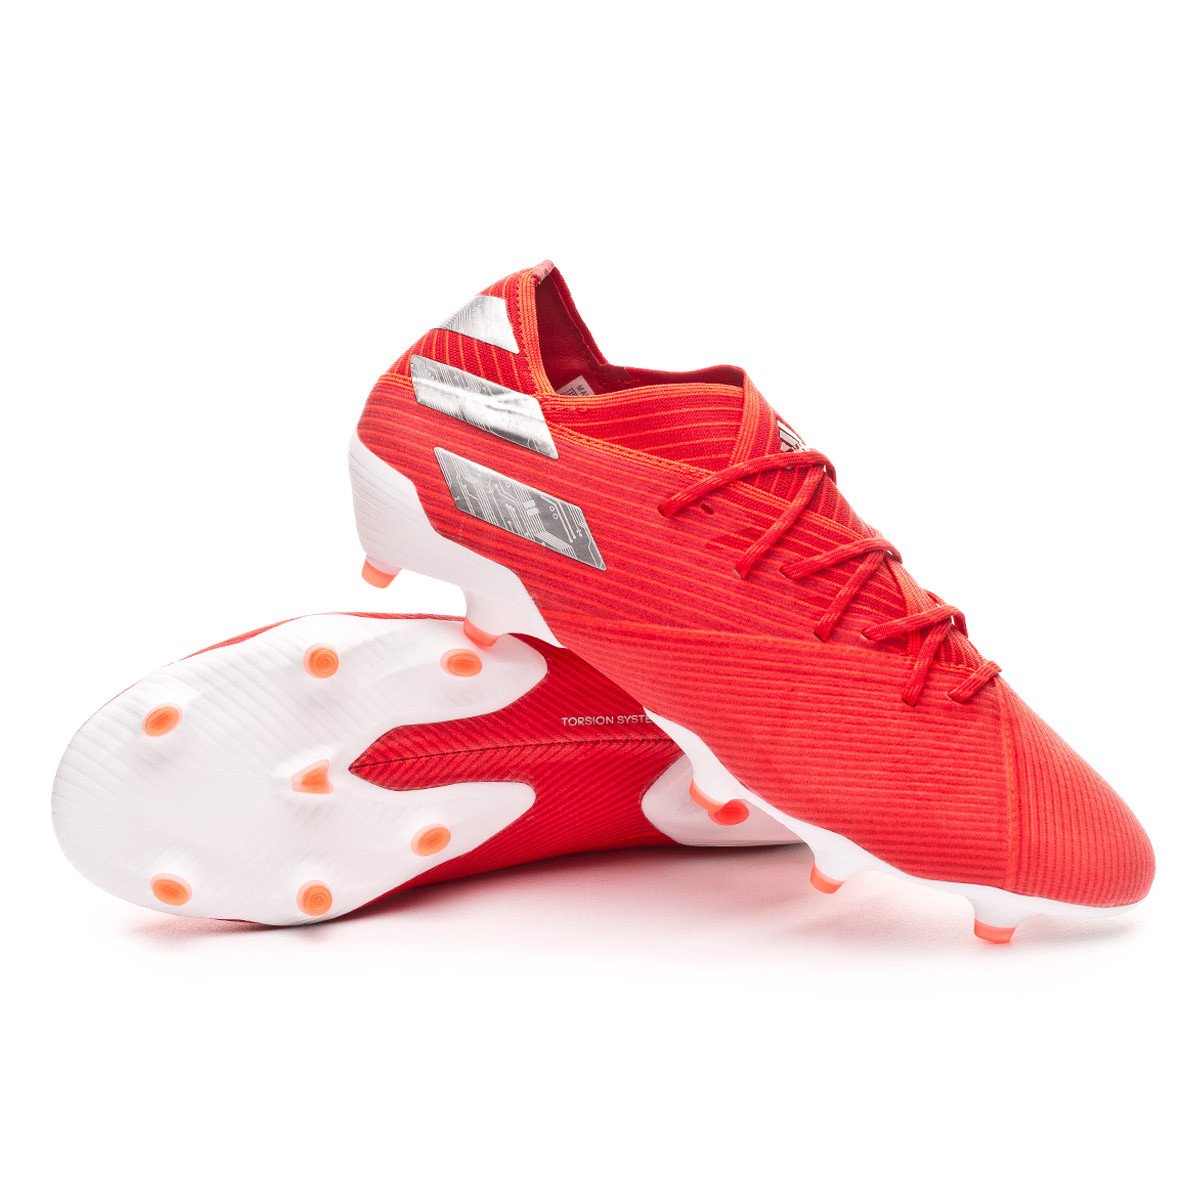 adidas nemeziz 19.1 fg soccer cleats